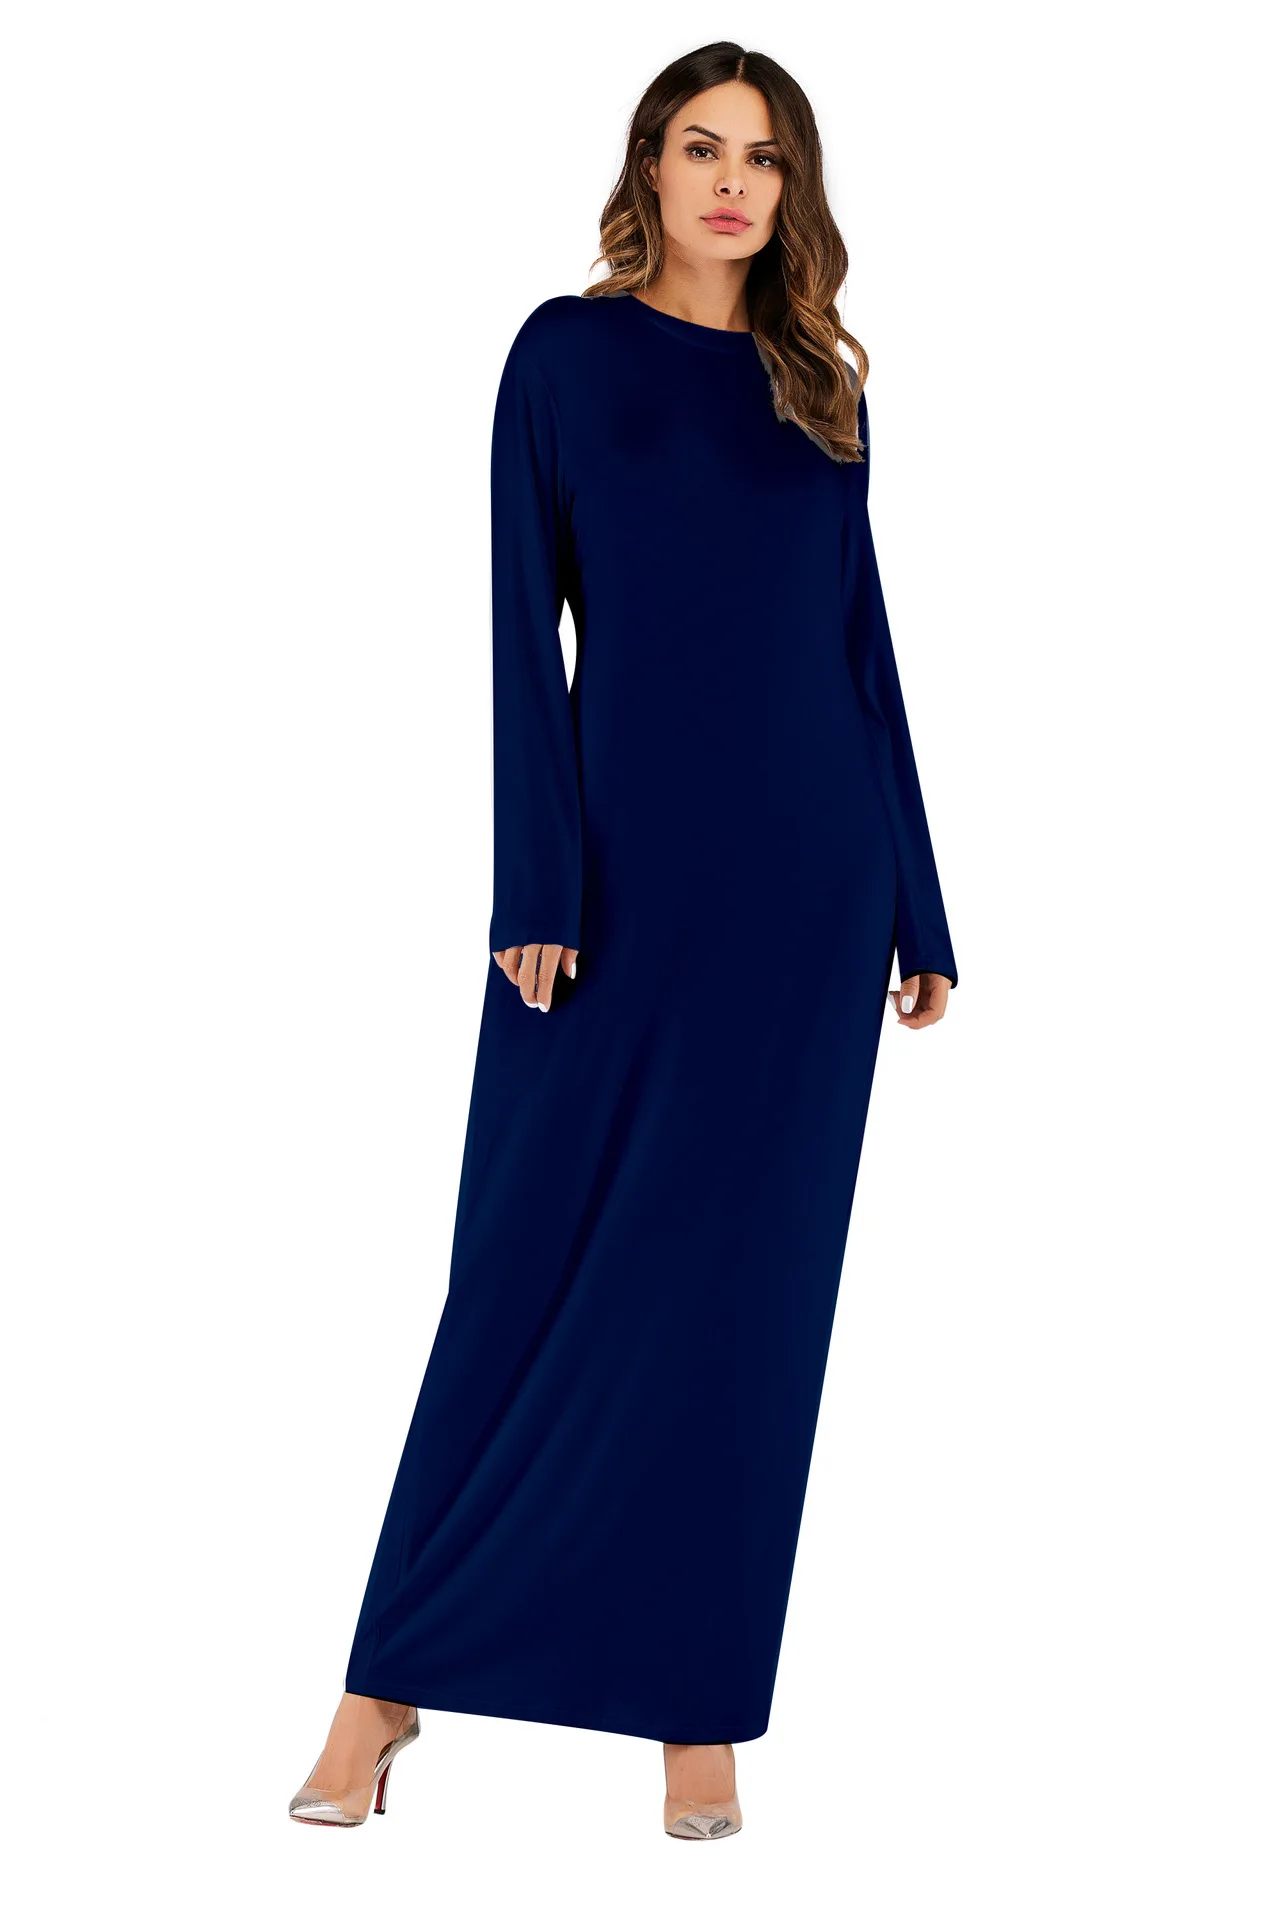 9099-buttom-muslim-wear-dresse